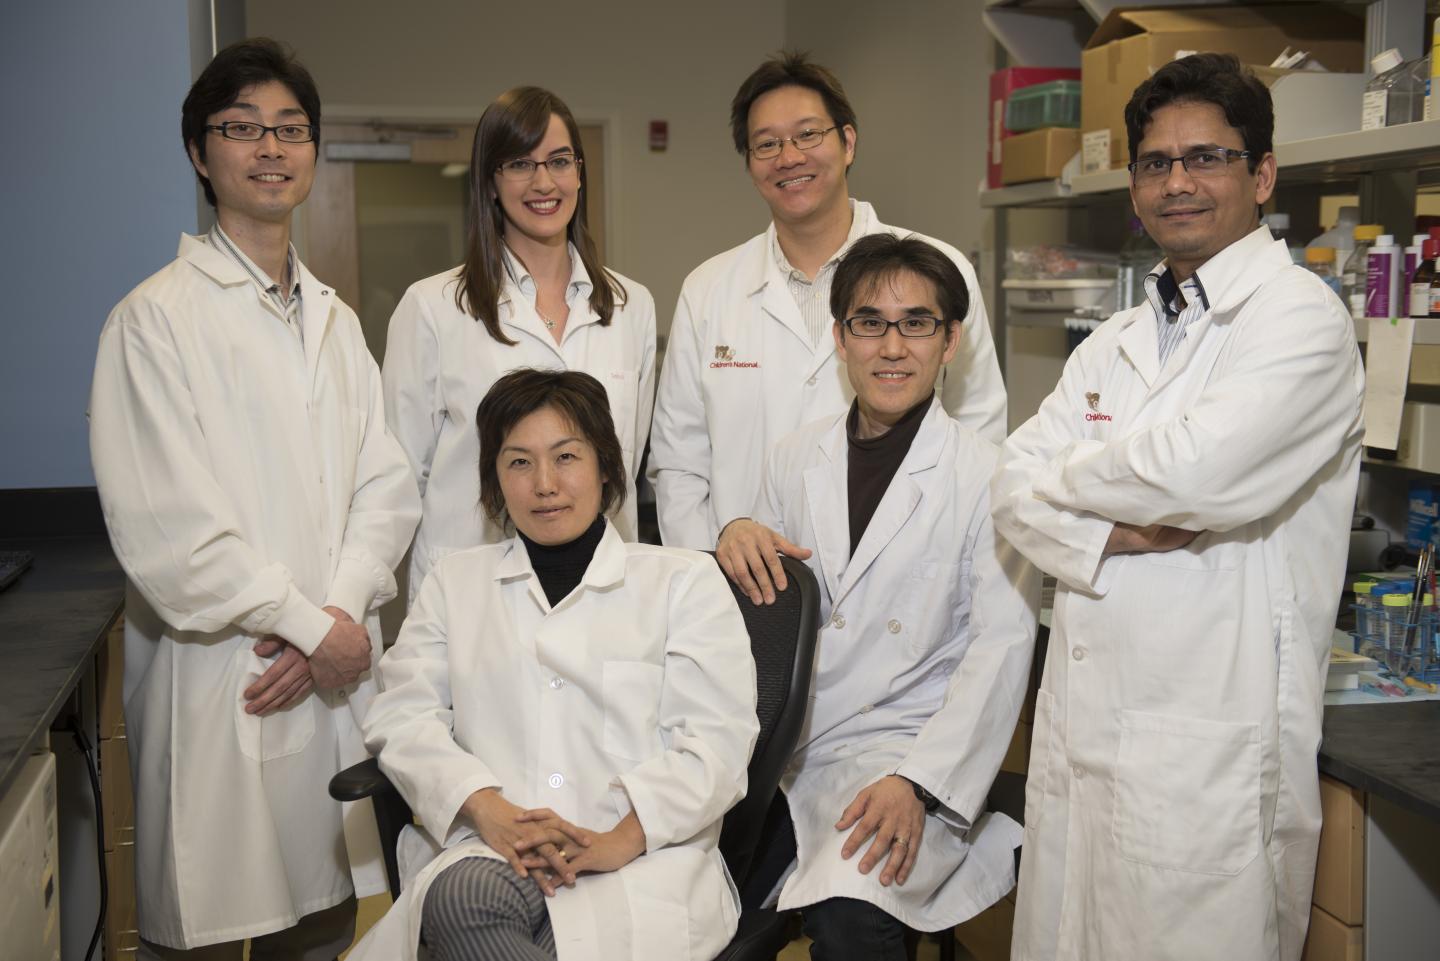 Kazue Hashimoto-Torii, Ph.D., and Her Laboratory Team